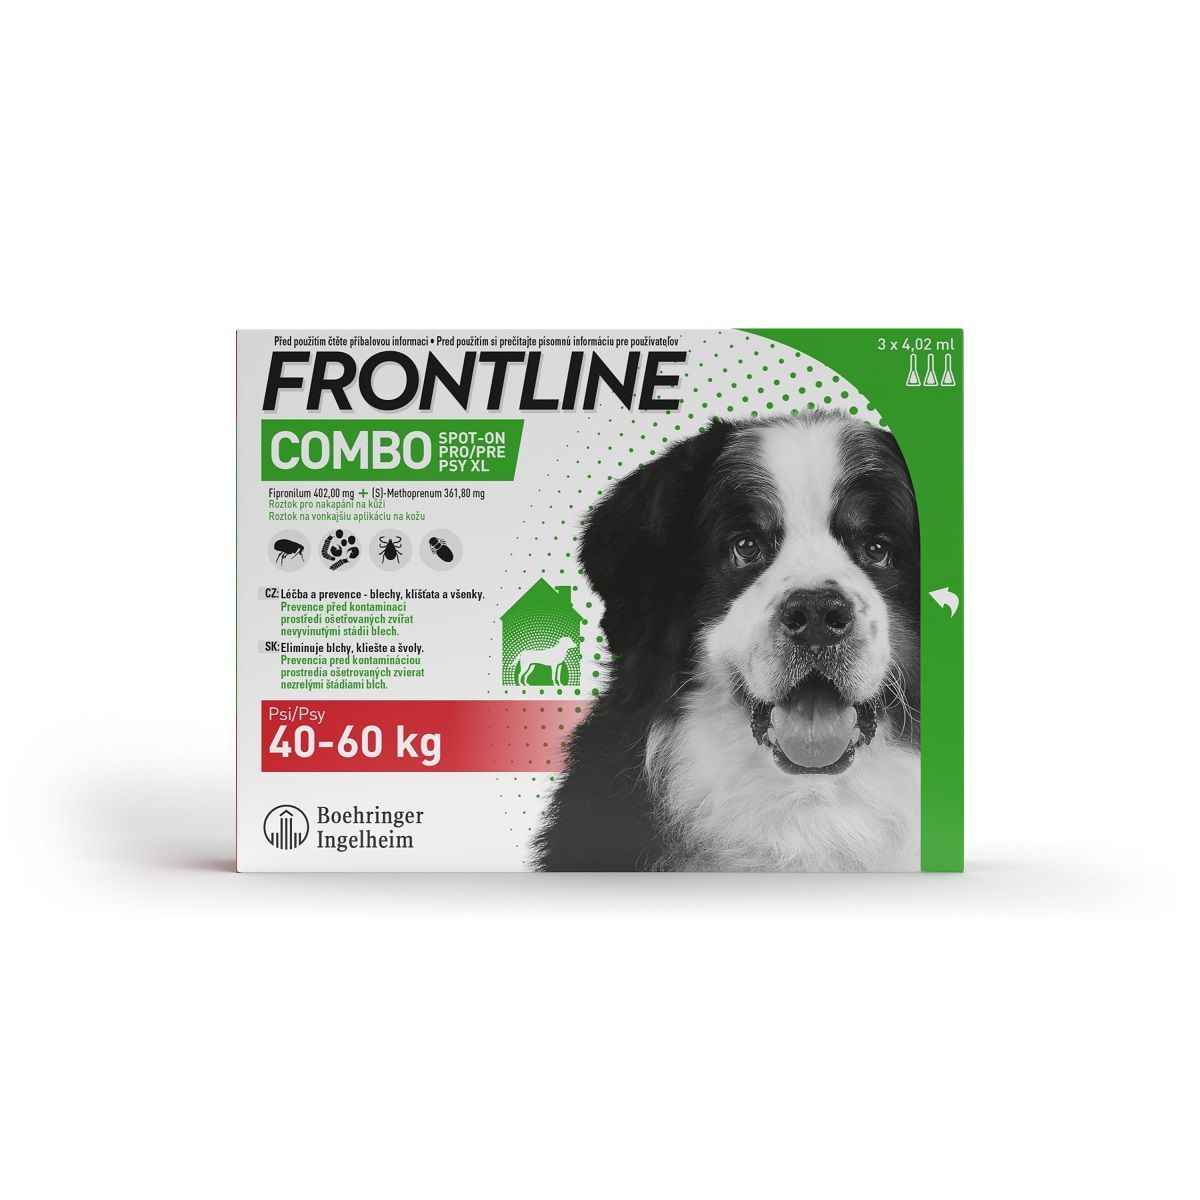 FRONTLINE Combo Spot-On Dog XL 3x4,02ml od 40kg